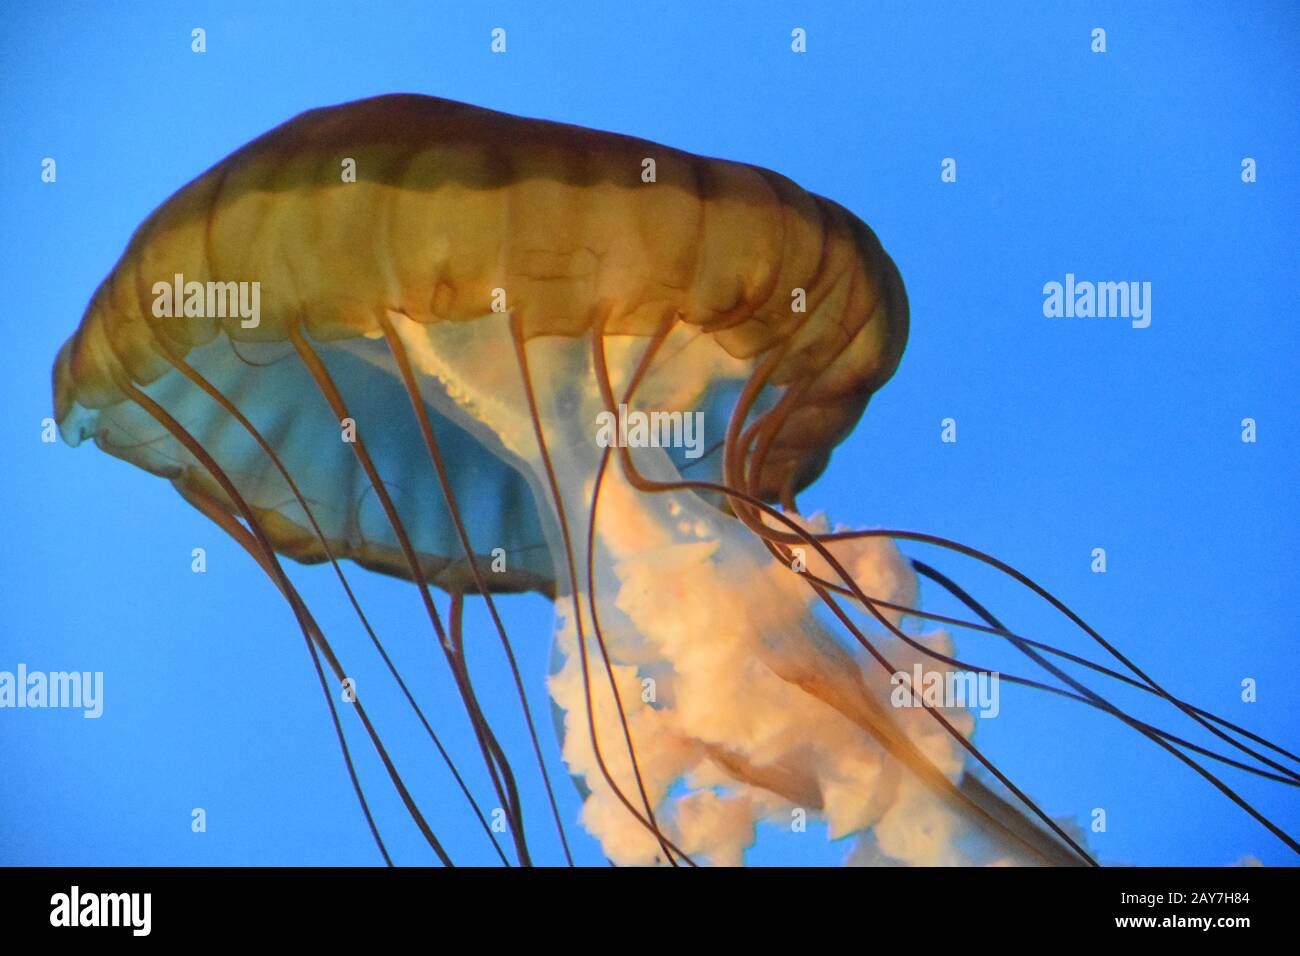 Pacific Sea Nettle Jellyfish Stock Photo